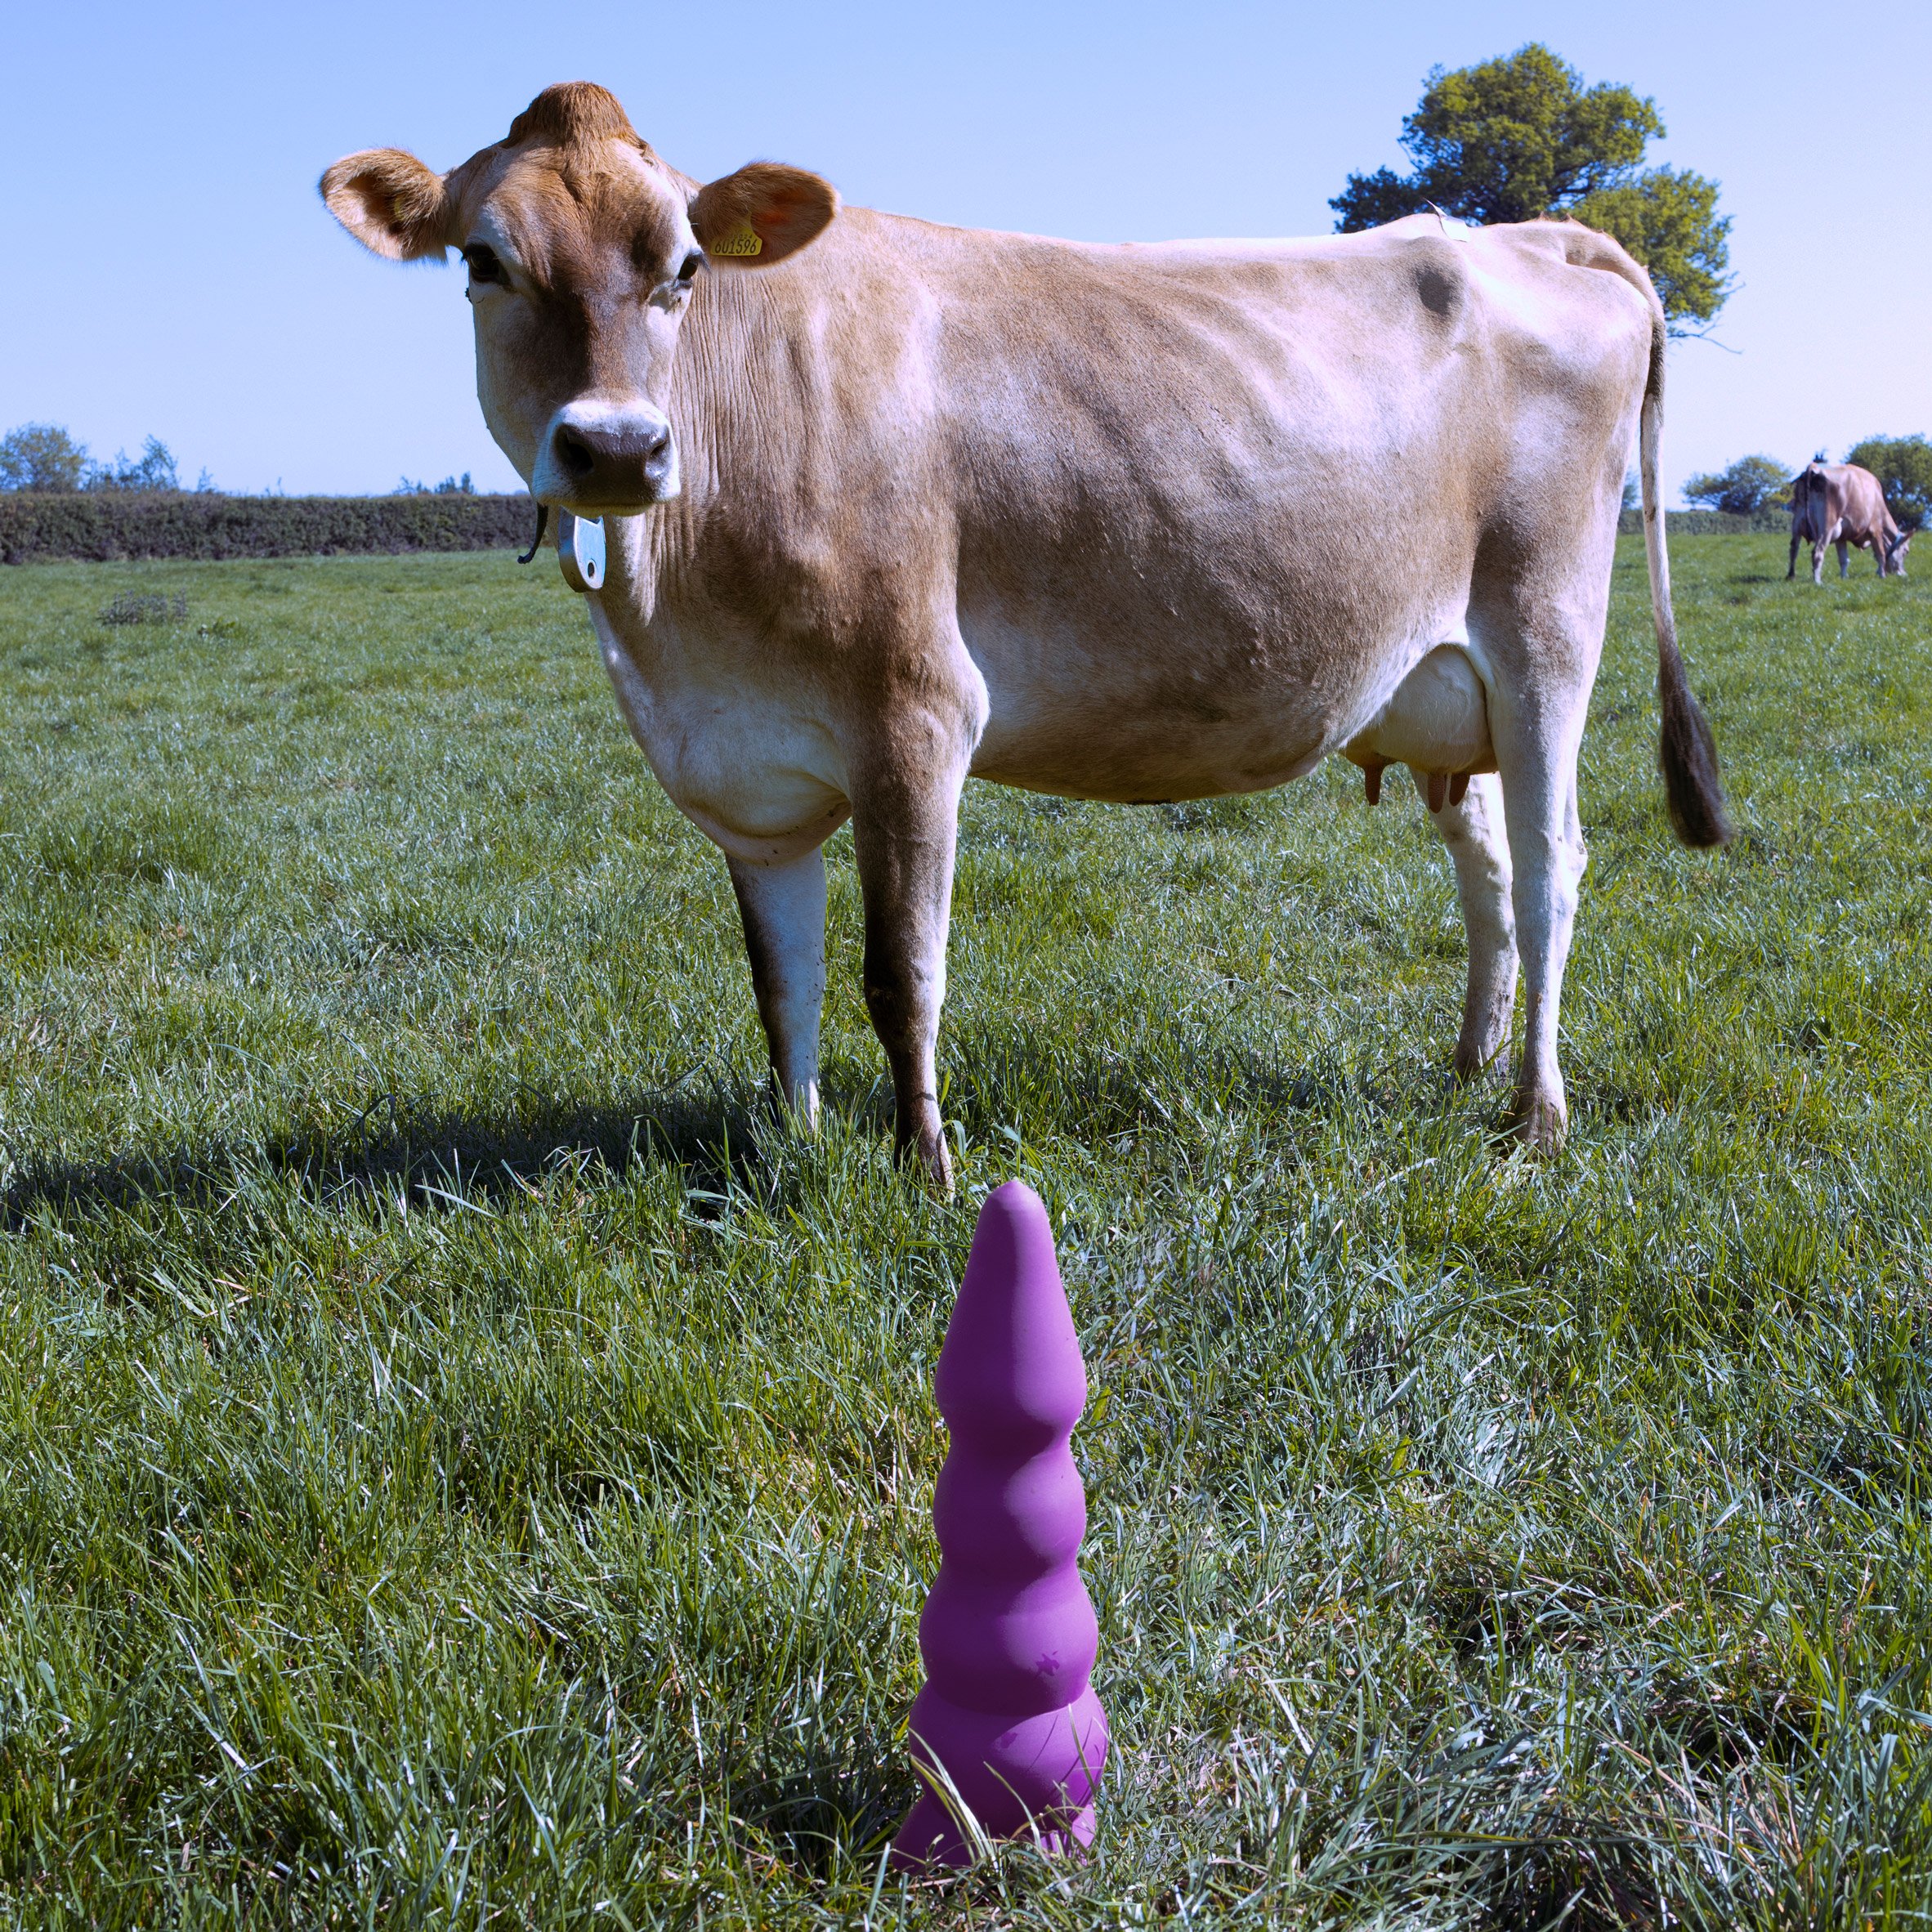 Ece Tan designs sex toys for cows to make farming practices more pleasurable image